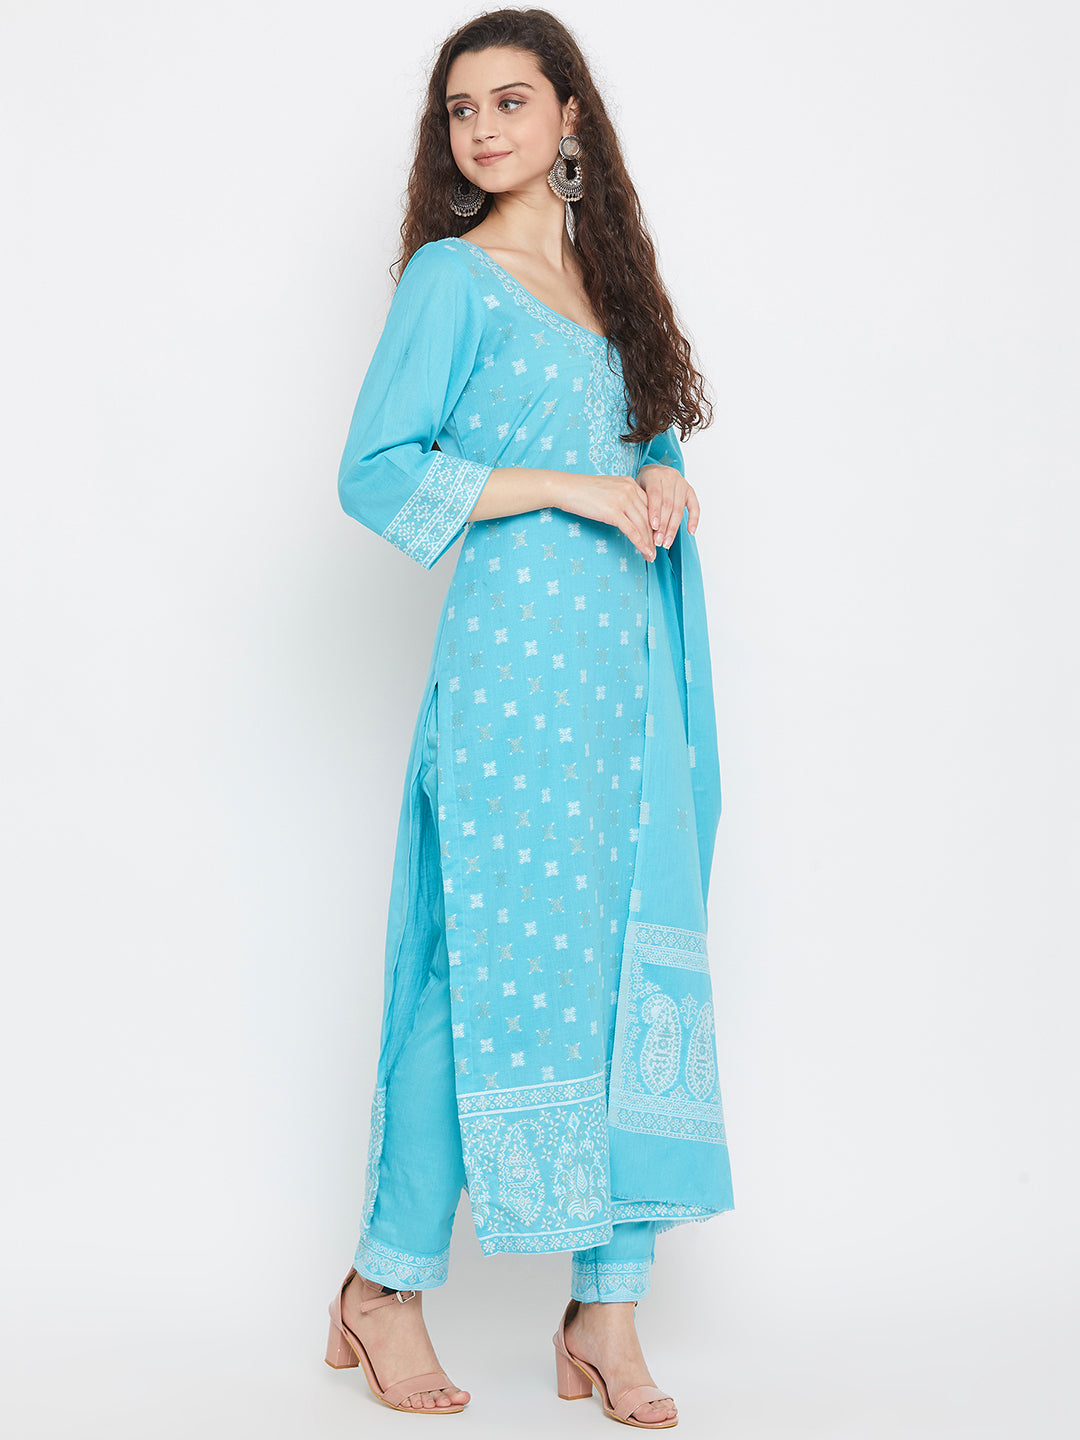 Cotton Jacquard Zari Woven Ferozi Dress Material with Cotton Silk Dupatta